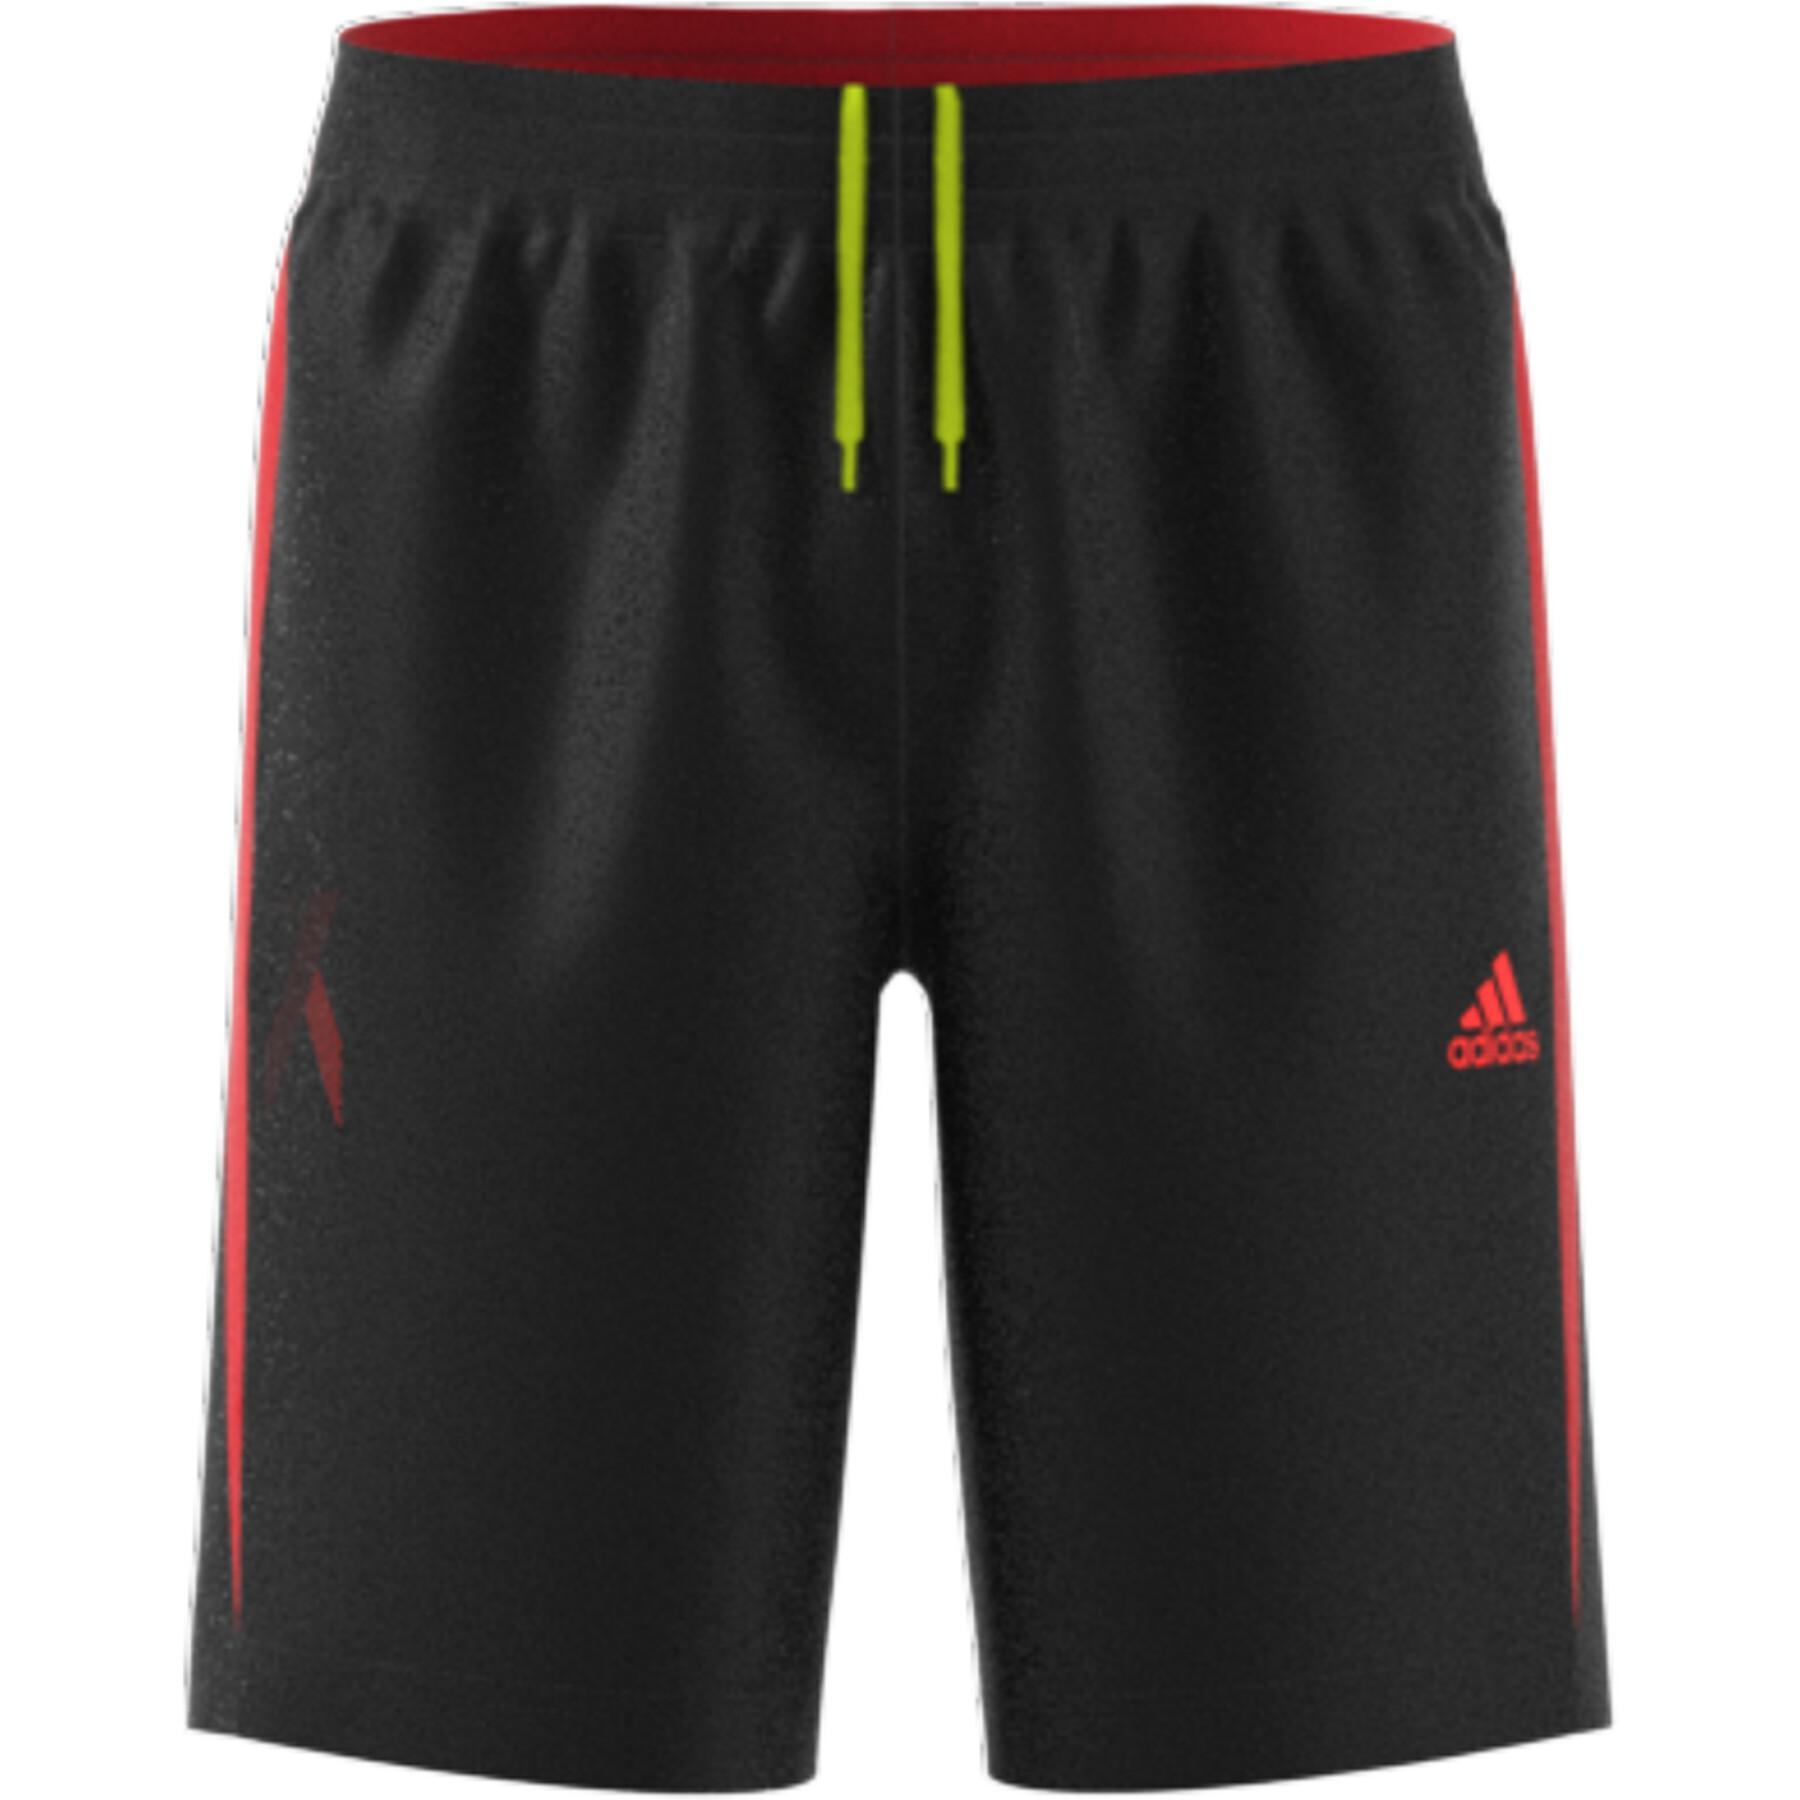 Children's shorts adidas AEROREADY X Football-Inspired